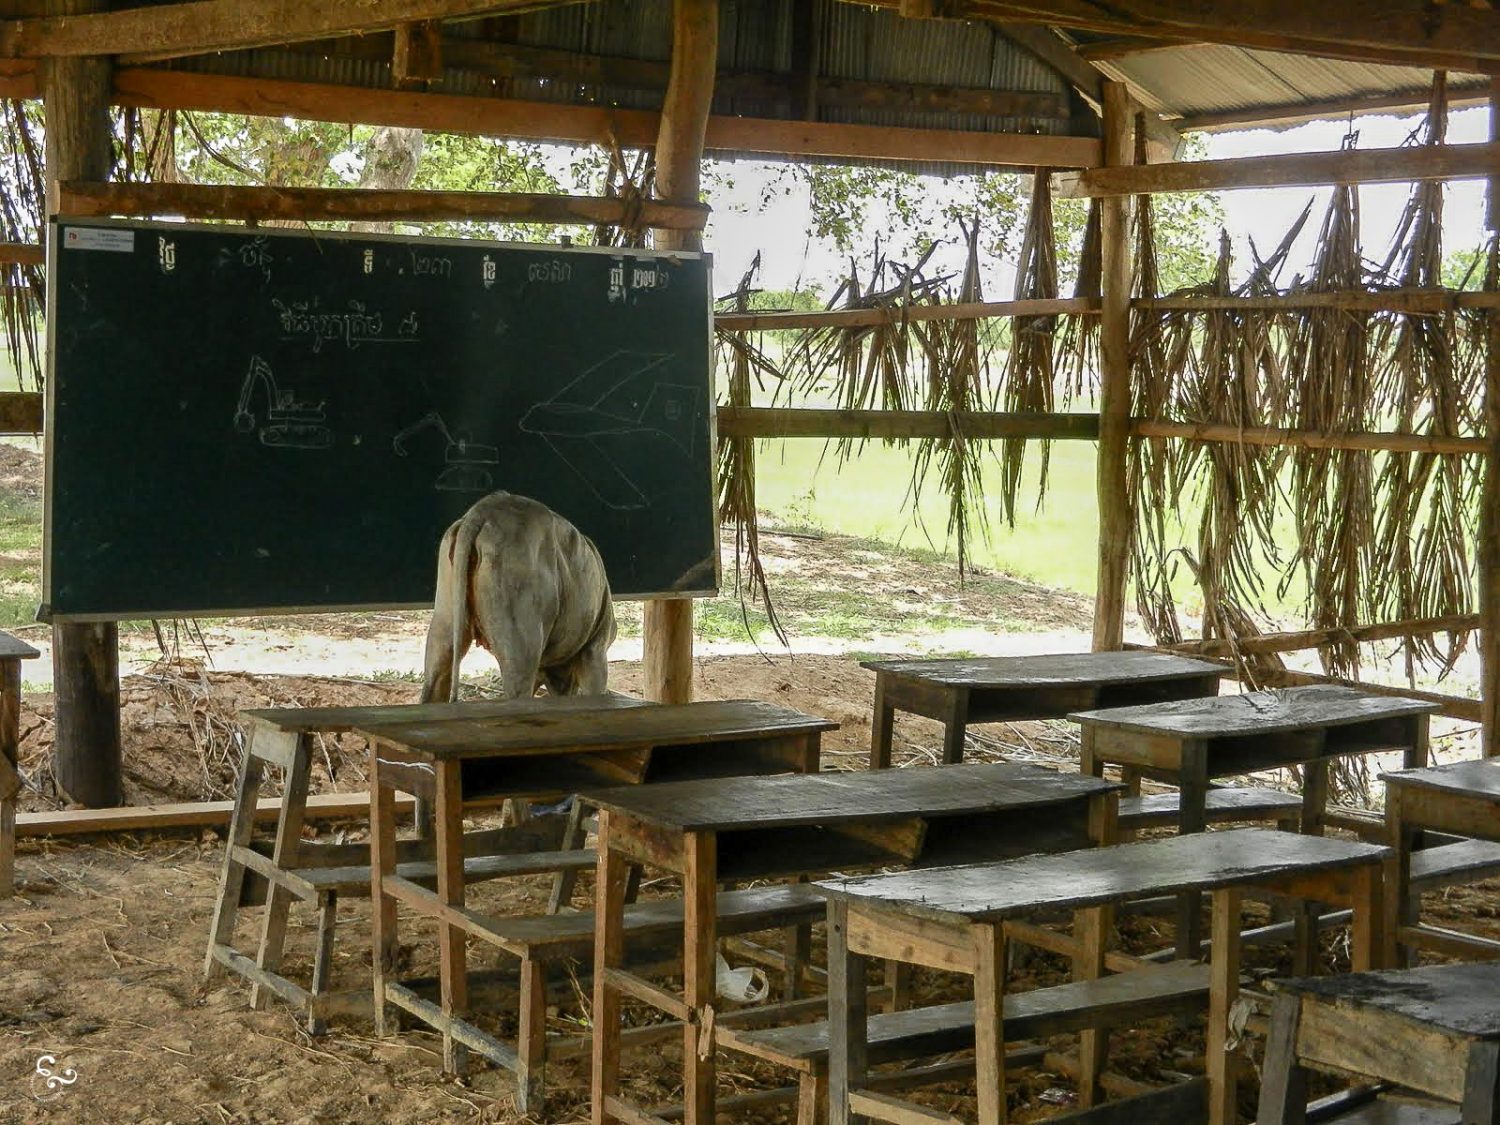 Nowhere & Everywhere Cambodia Poverty Village Home Schools